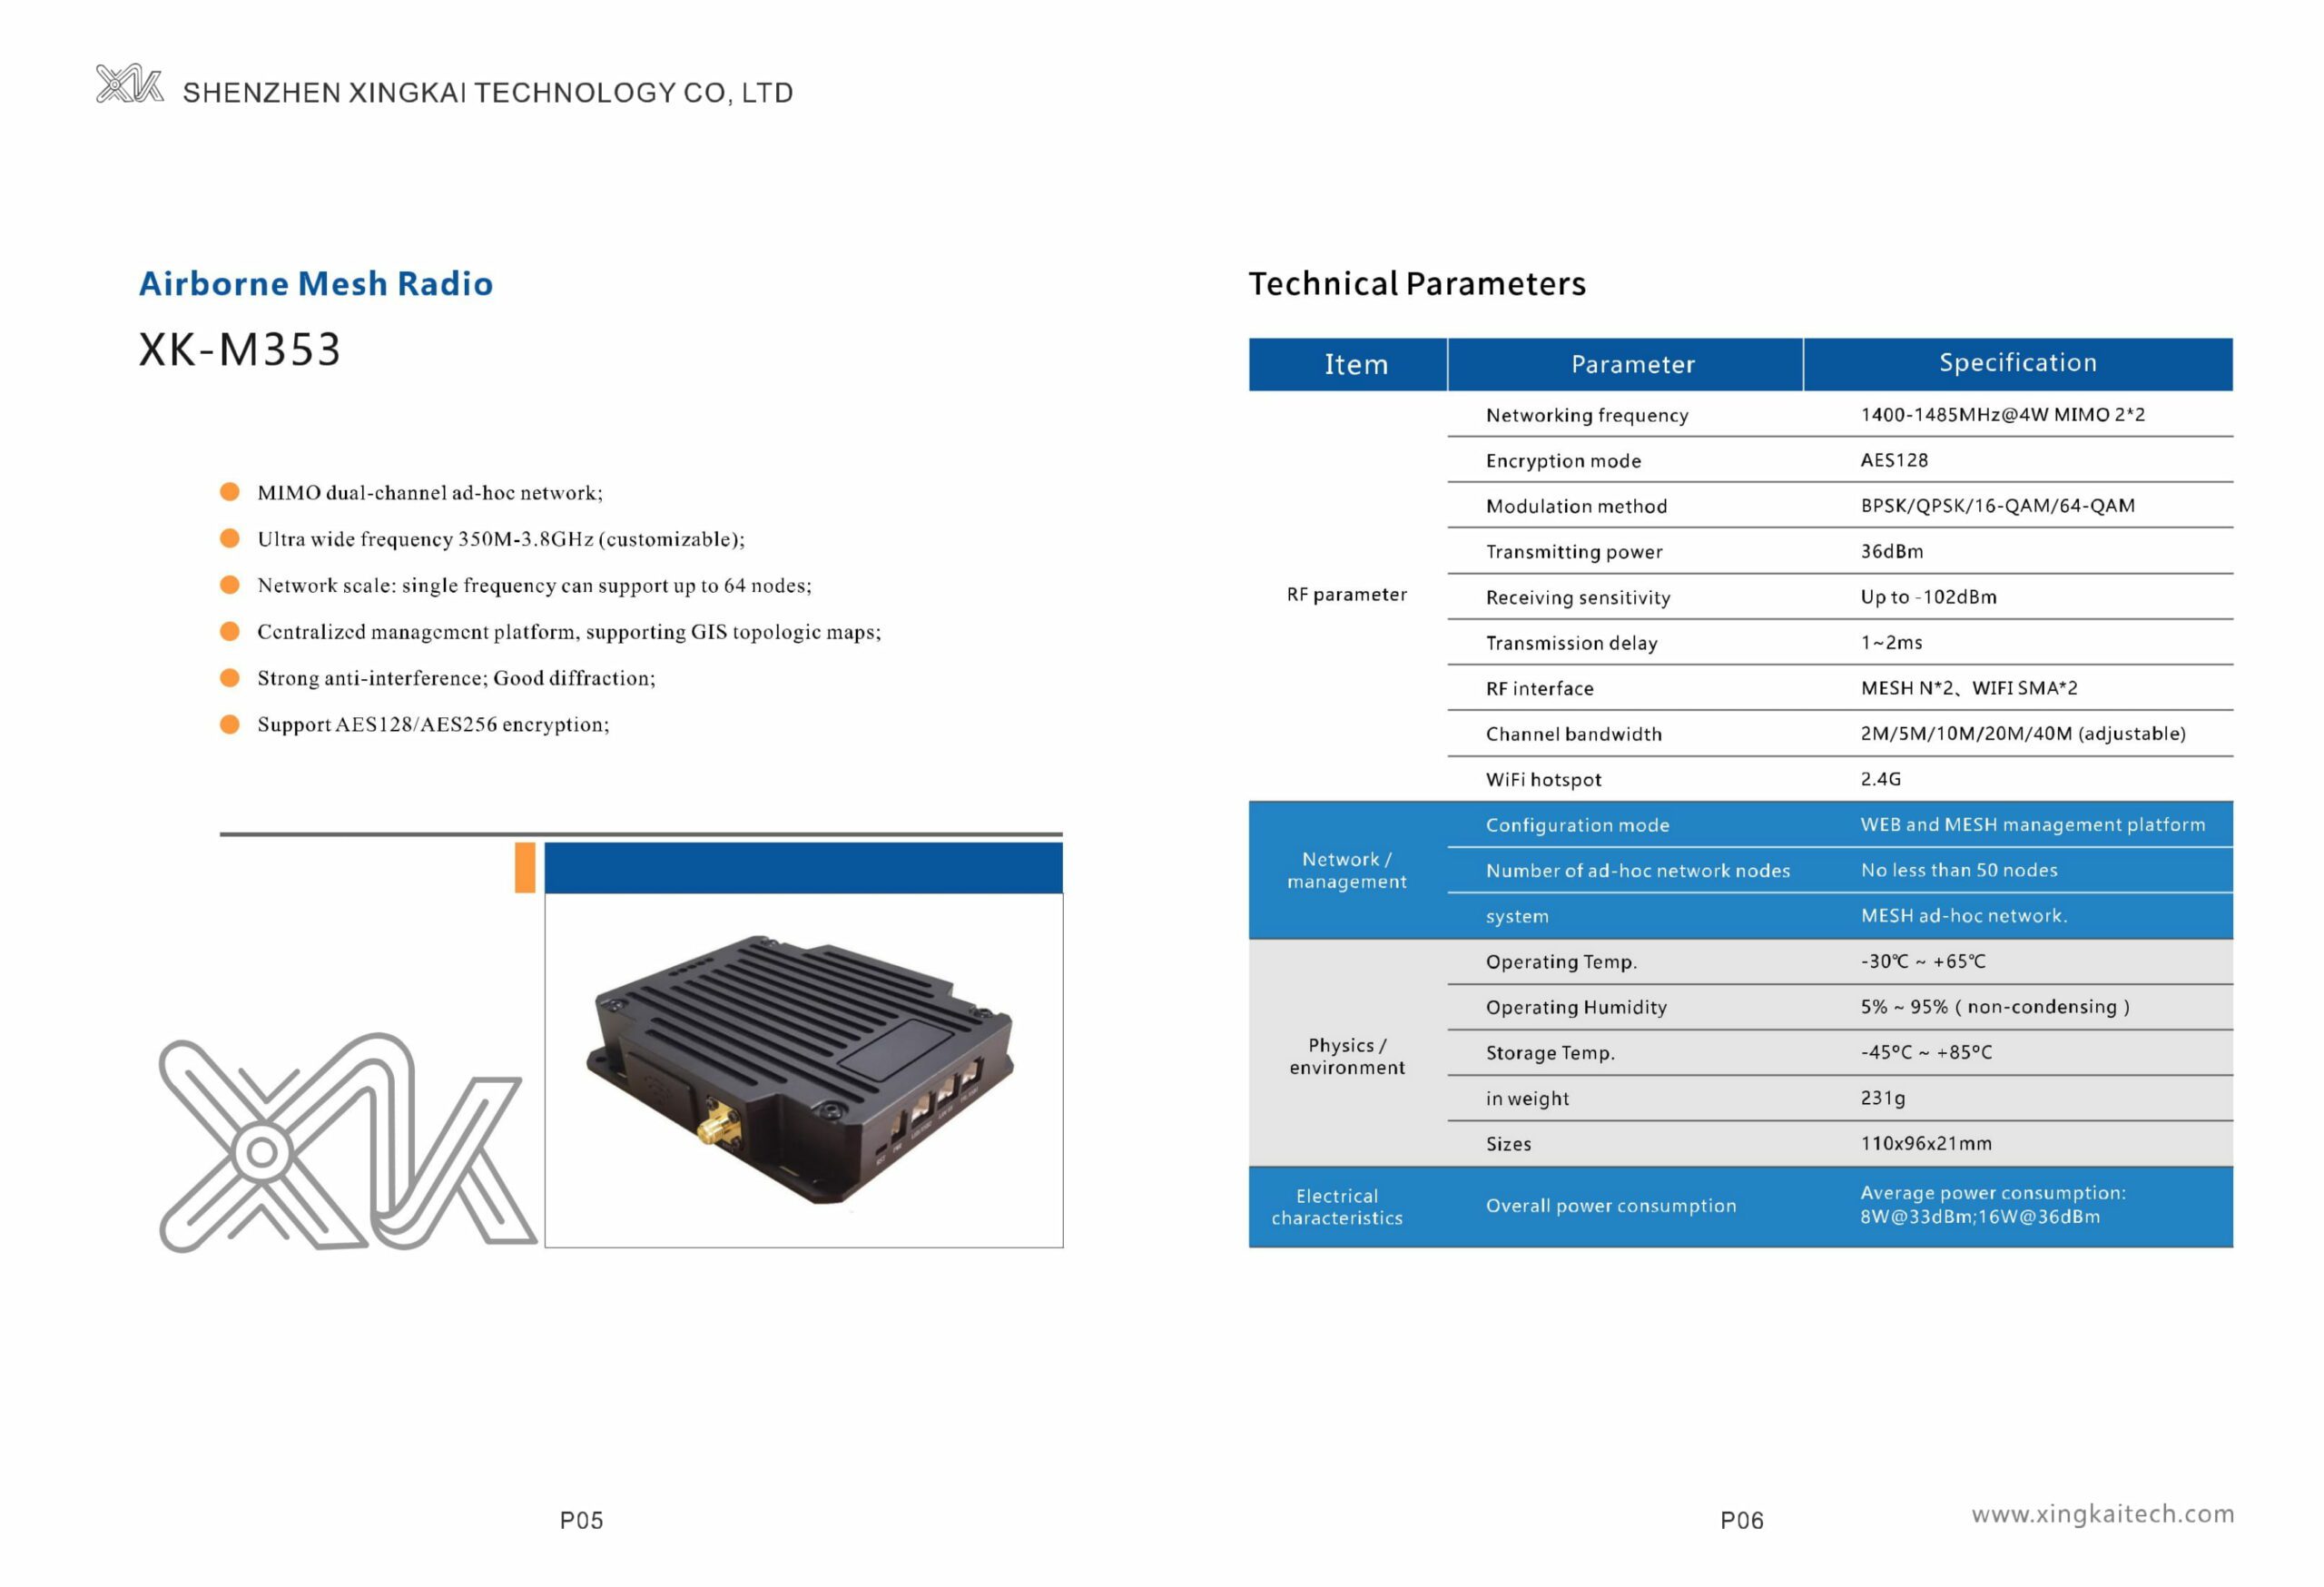 Catalogue Of Shenzhen Xingkai Technology Co. Ltd 04 Scaled